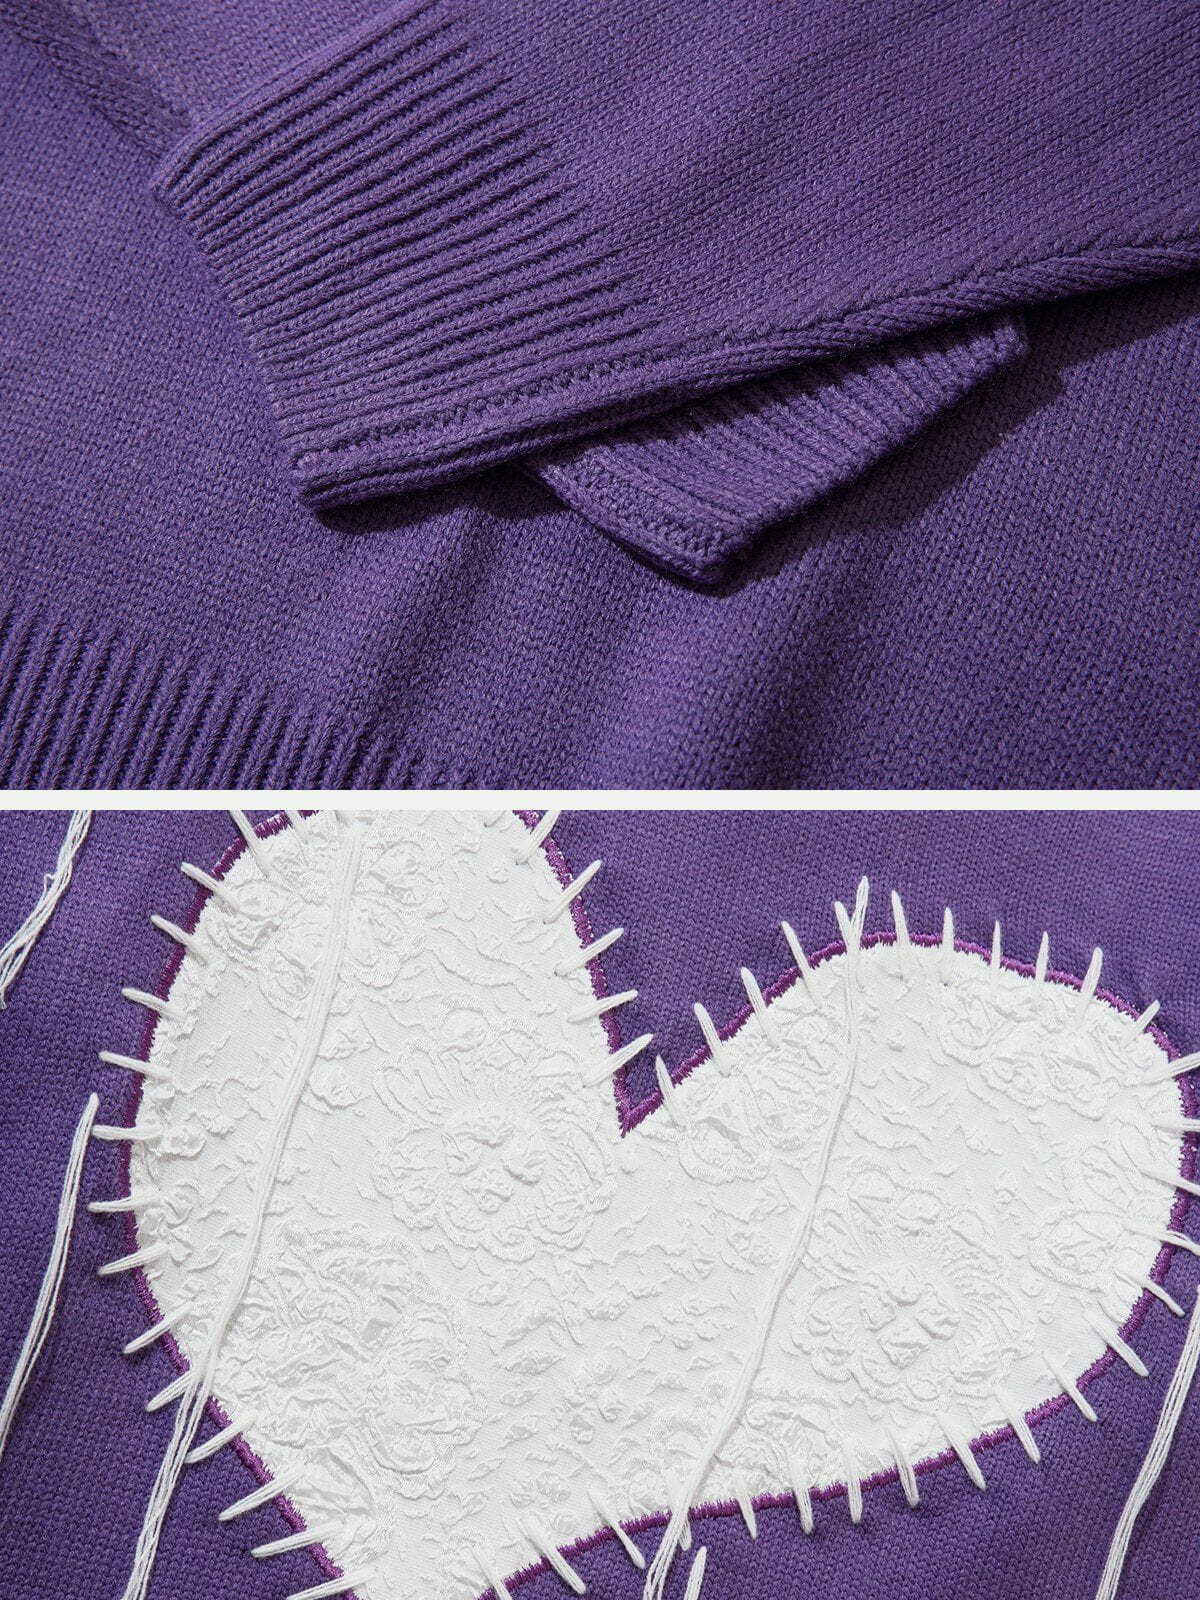 heartfelt patch love sweater y2k fashion statement 1180